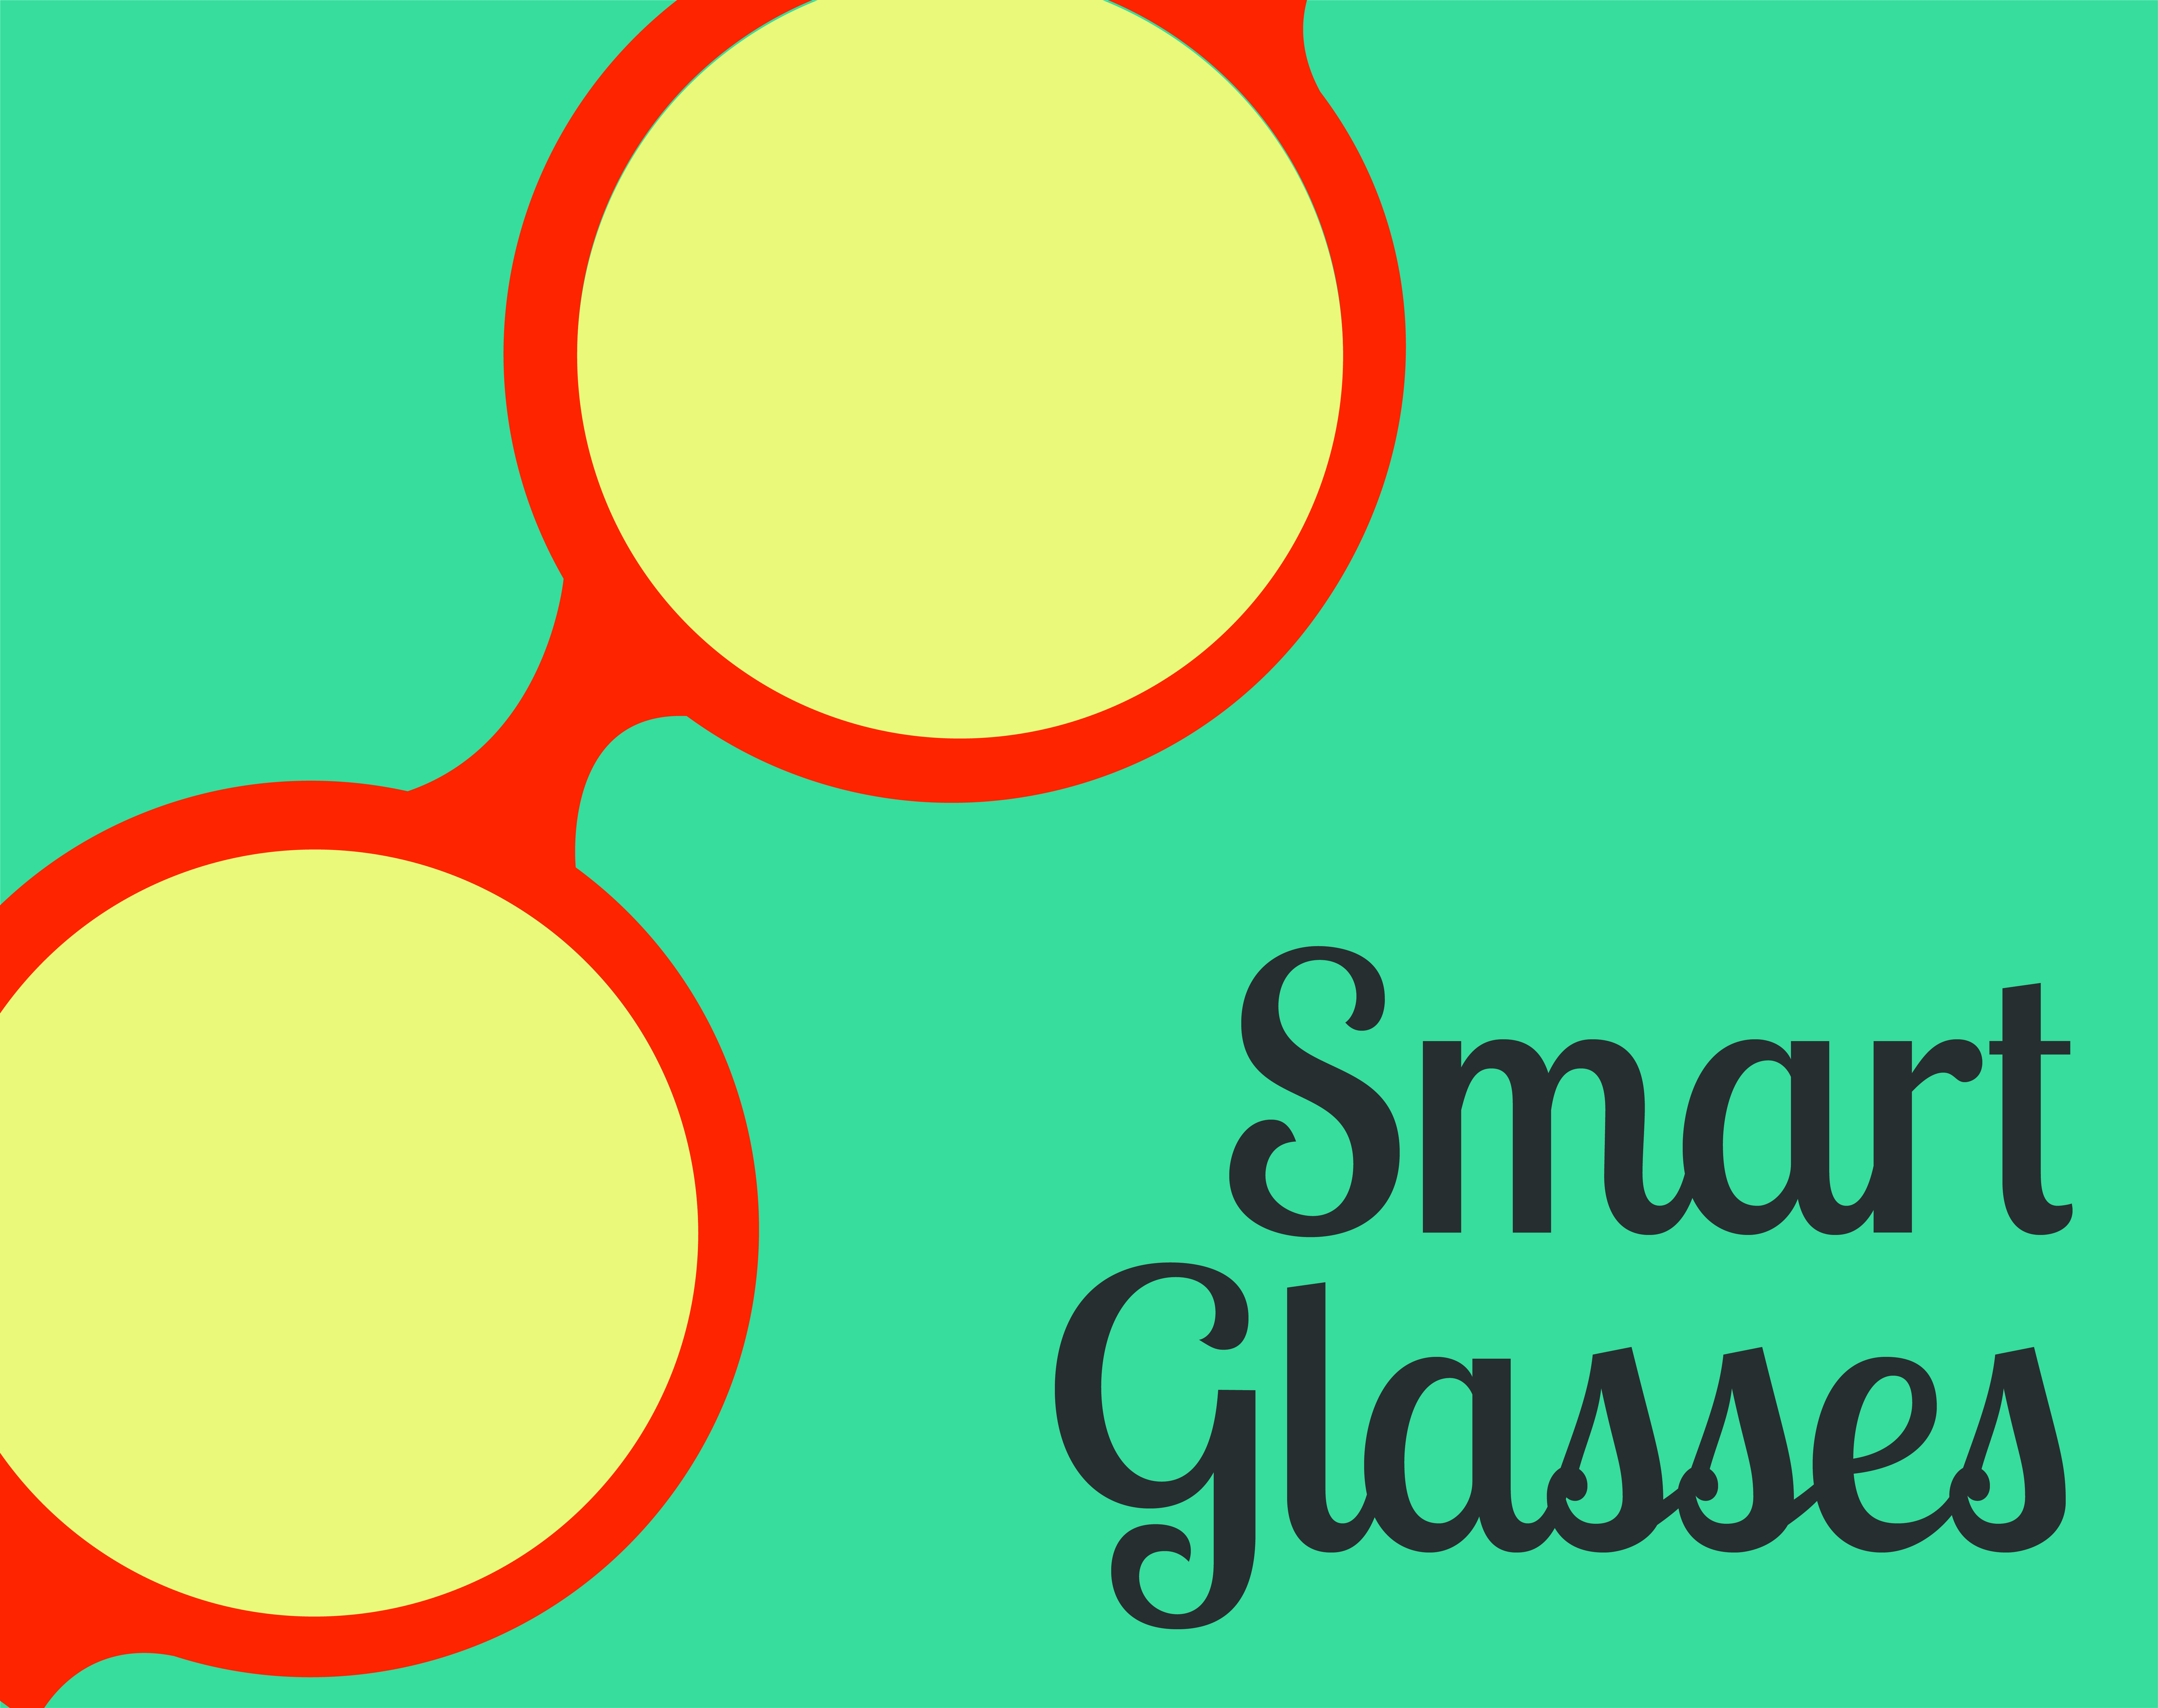 Smart glasses